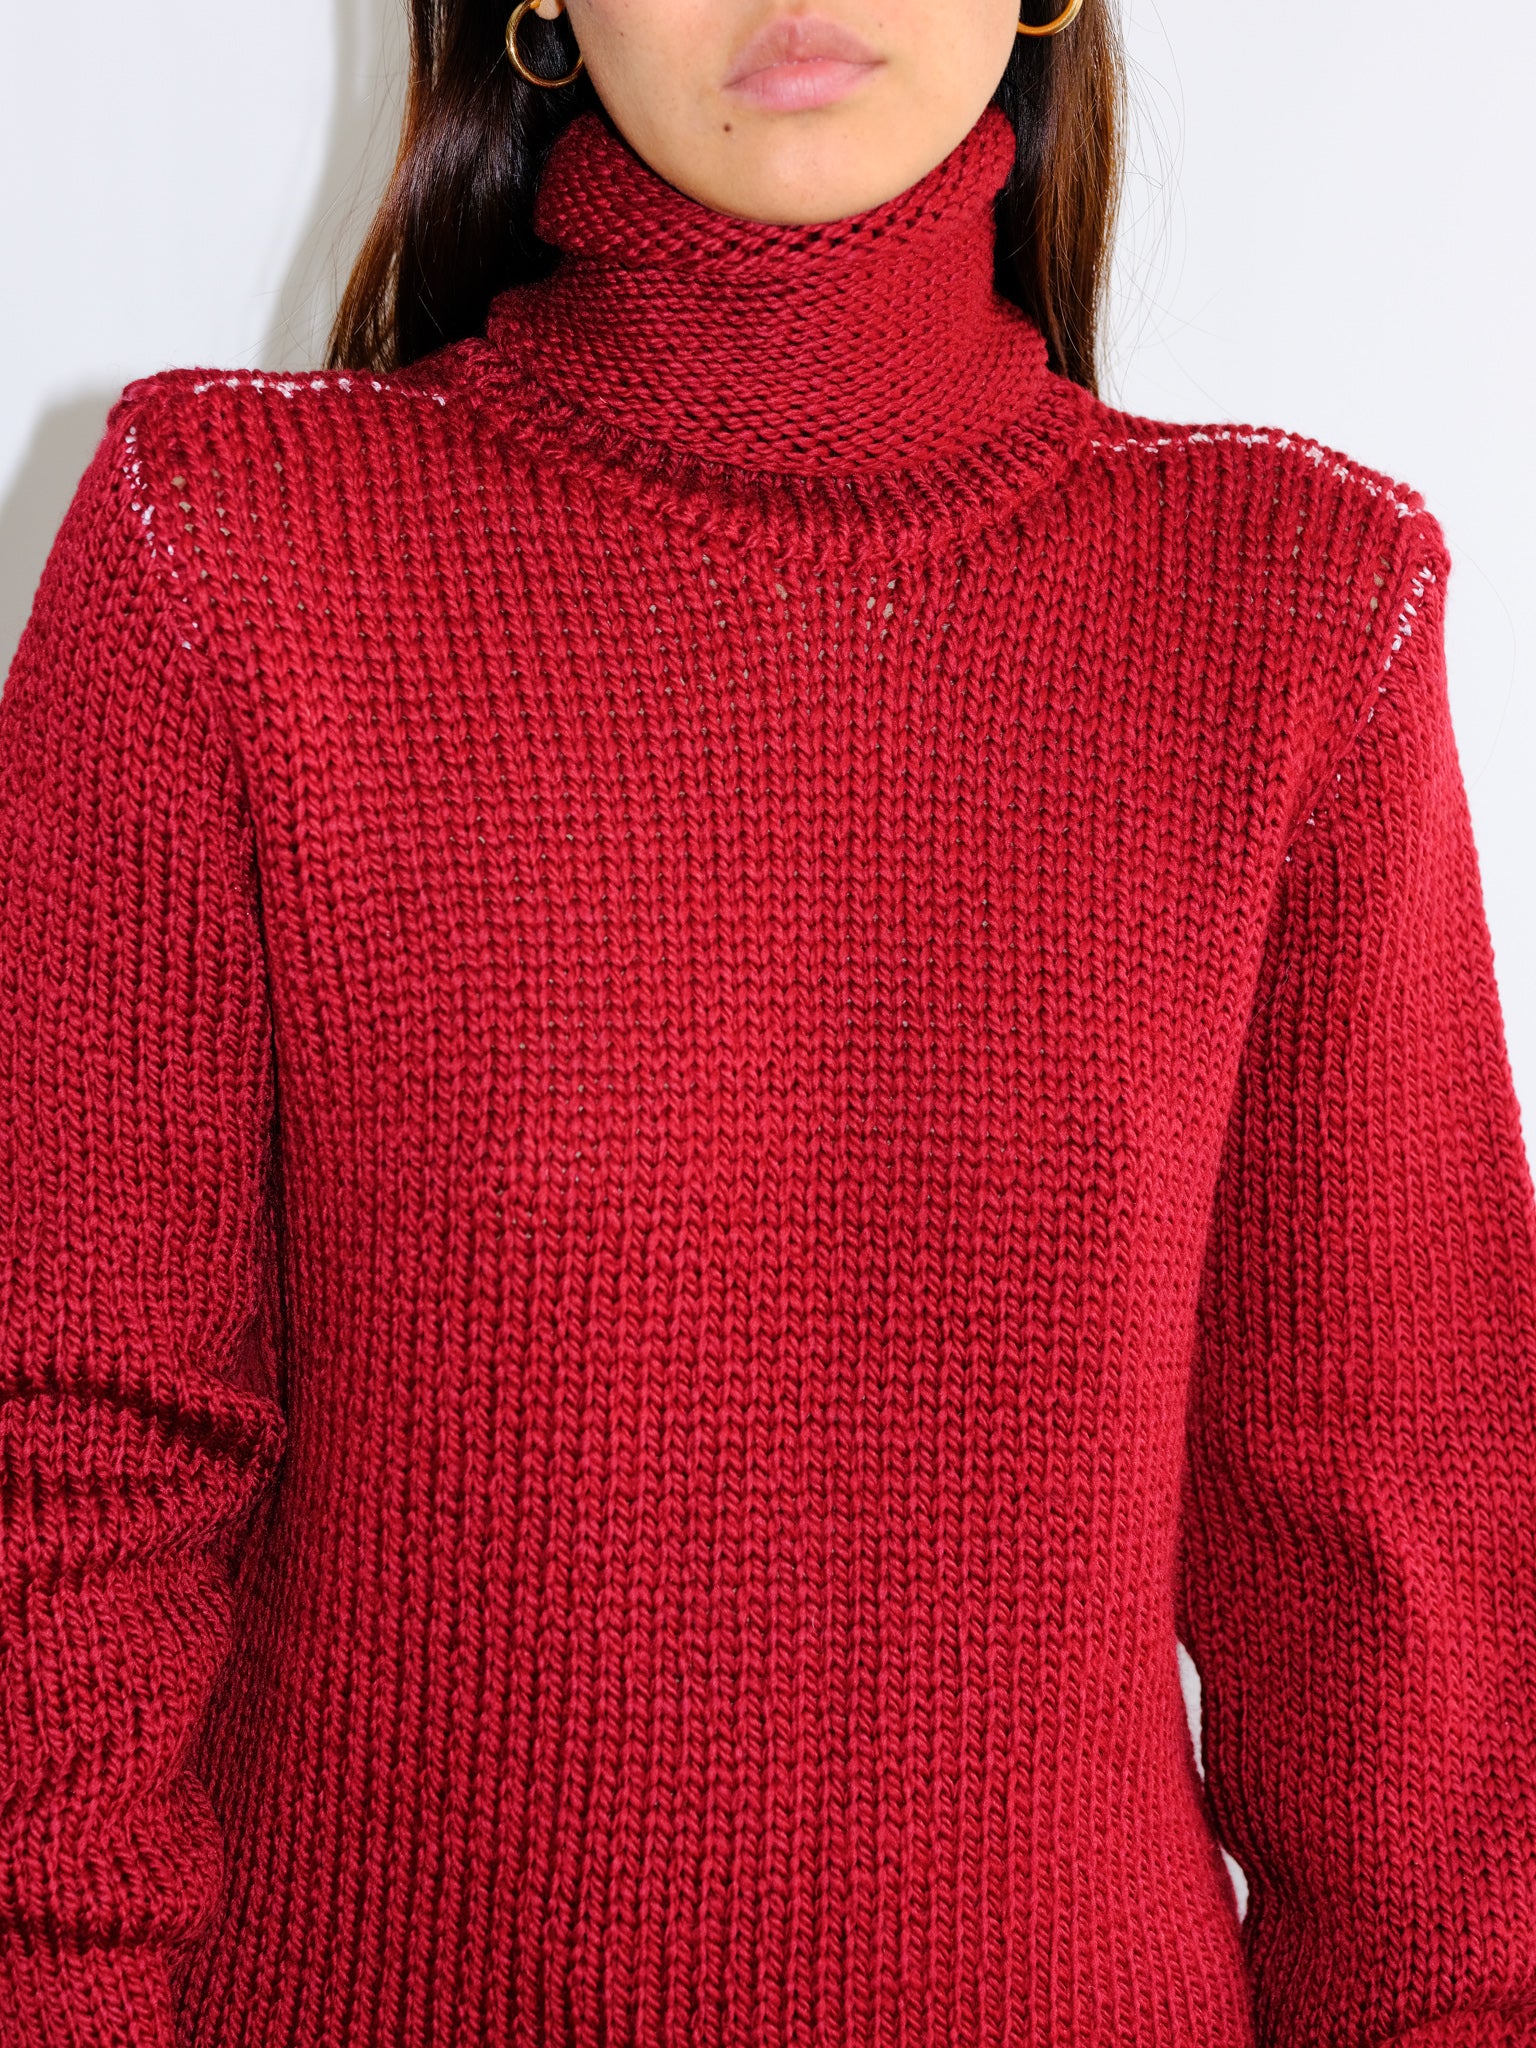 Martin Margiela wool sweater